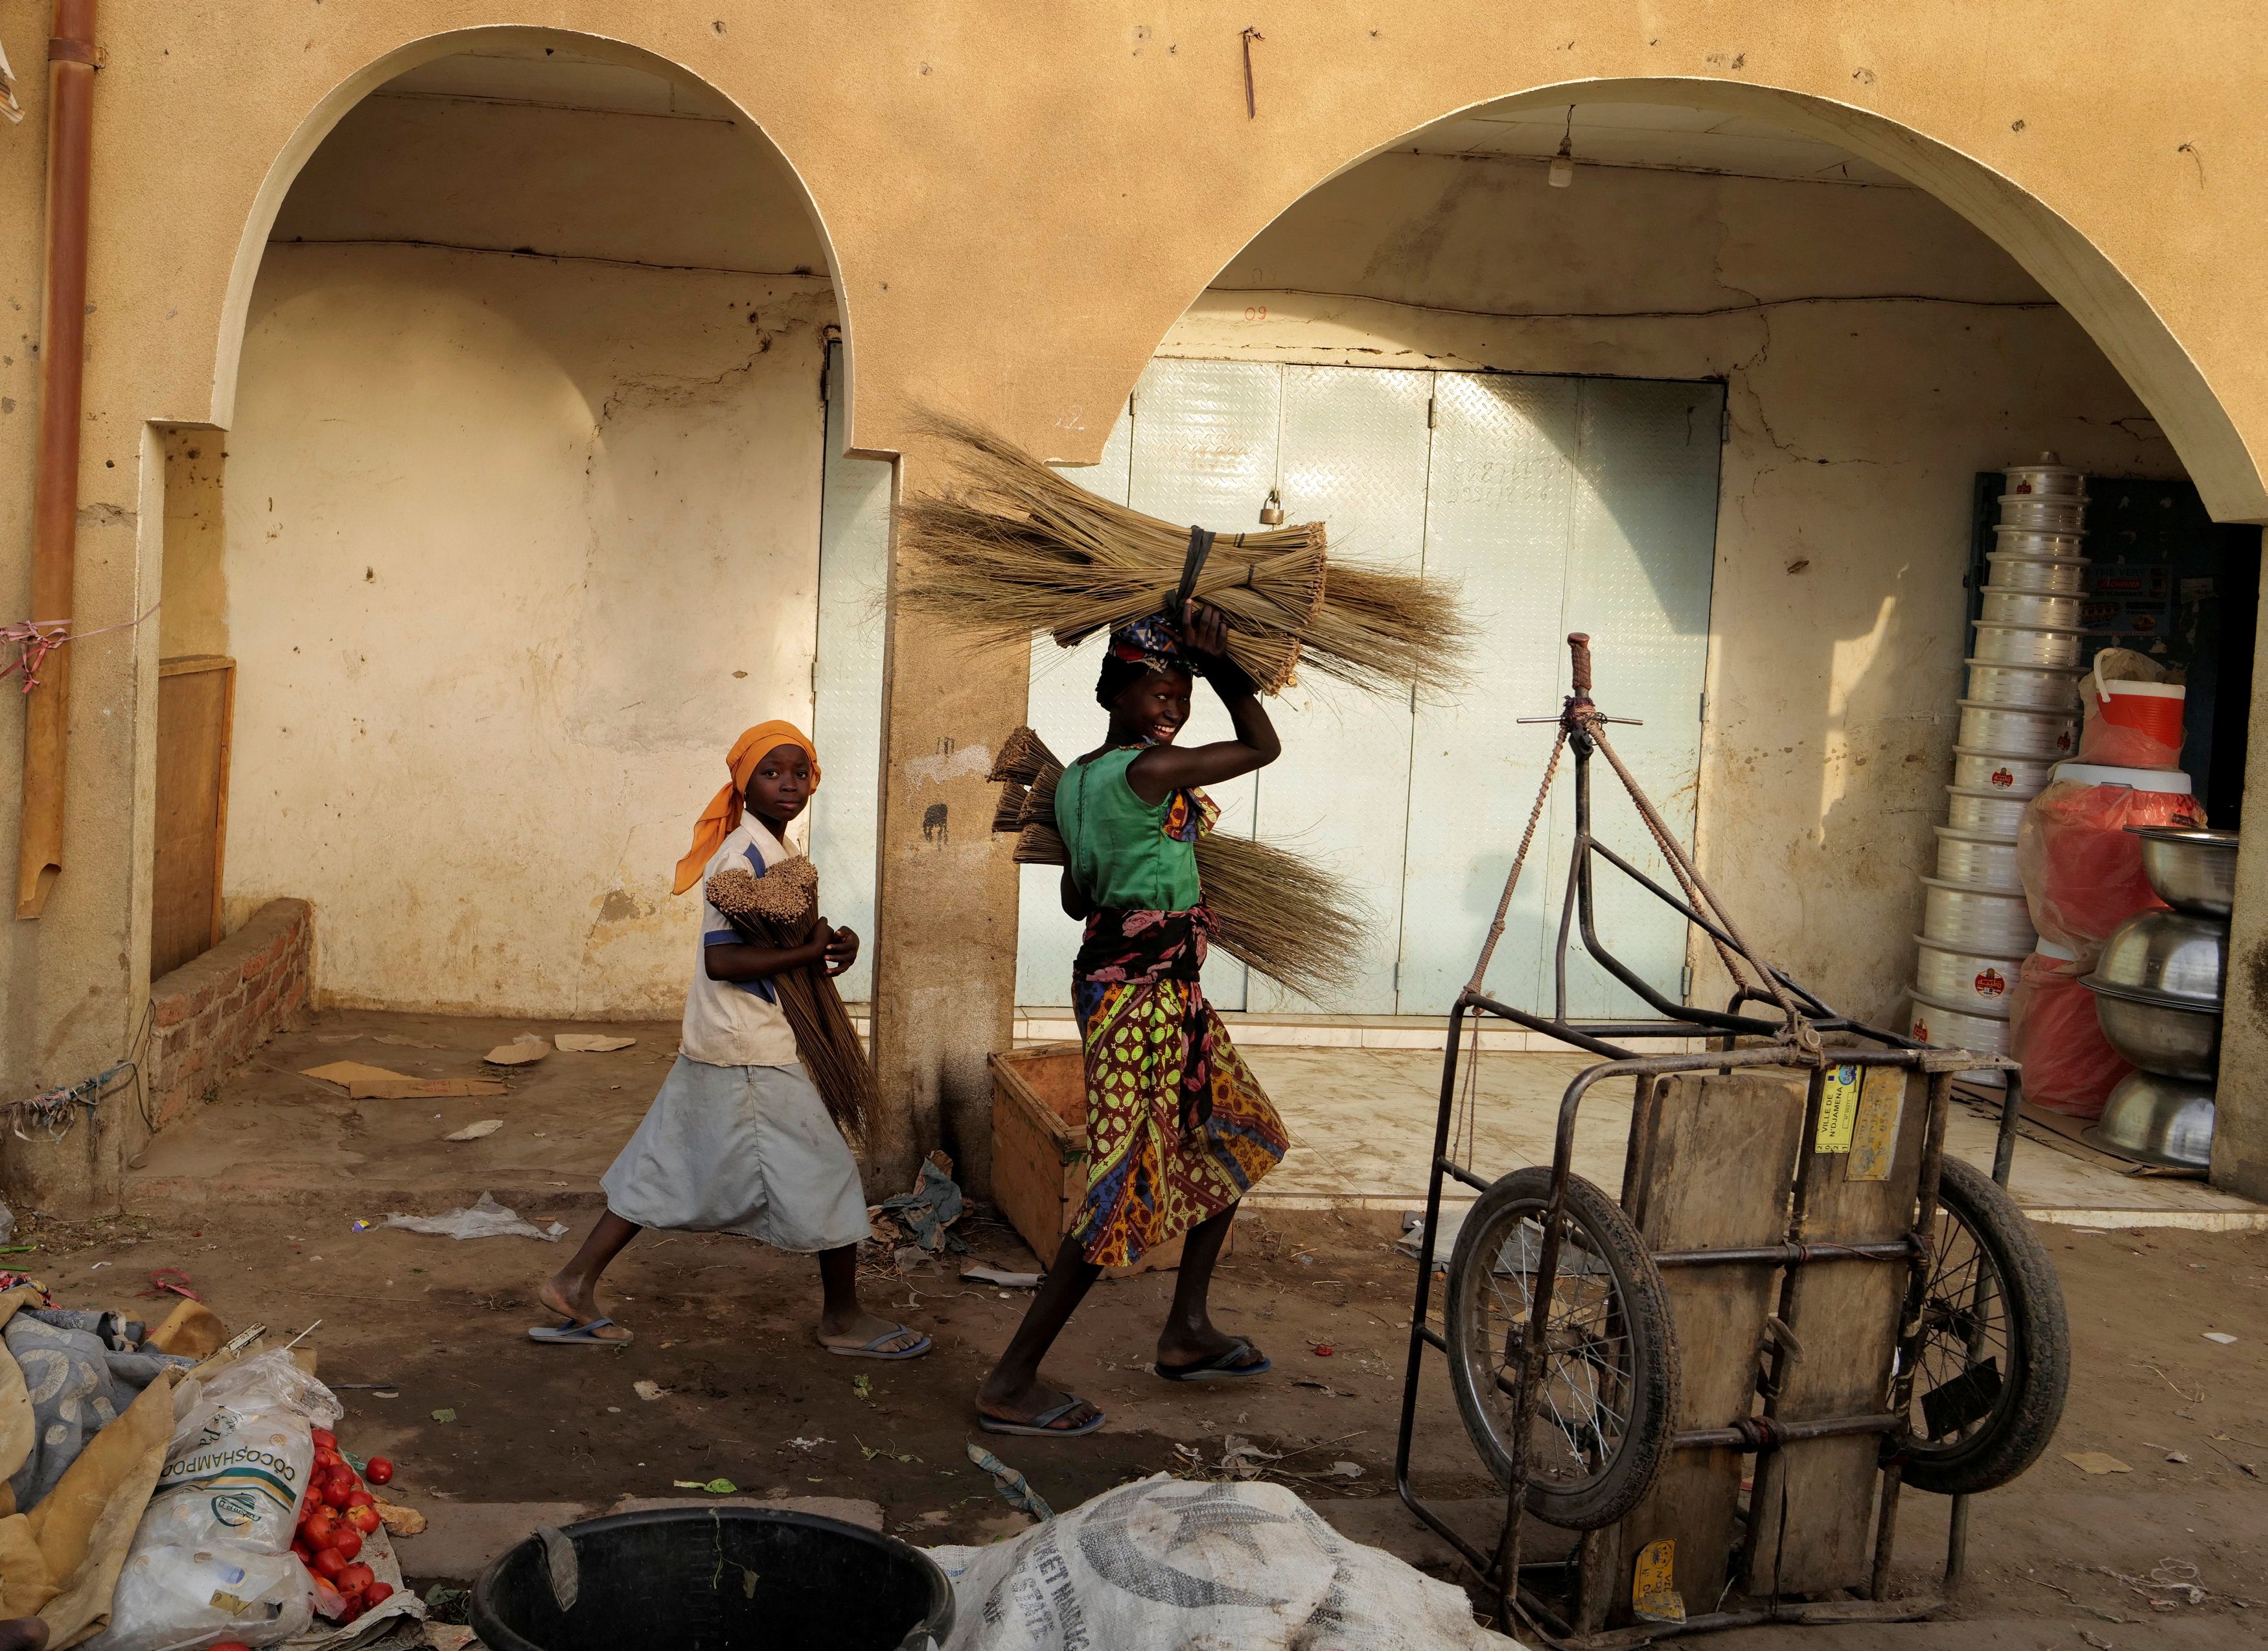 Street vendor girls carry brooms for sale at the market in N'djamena